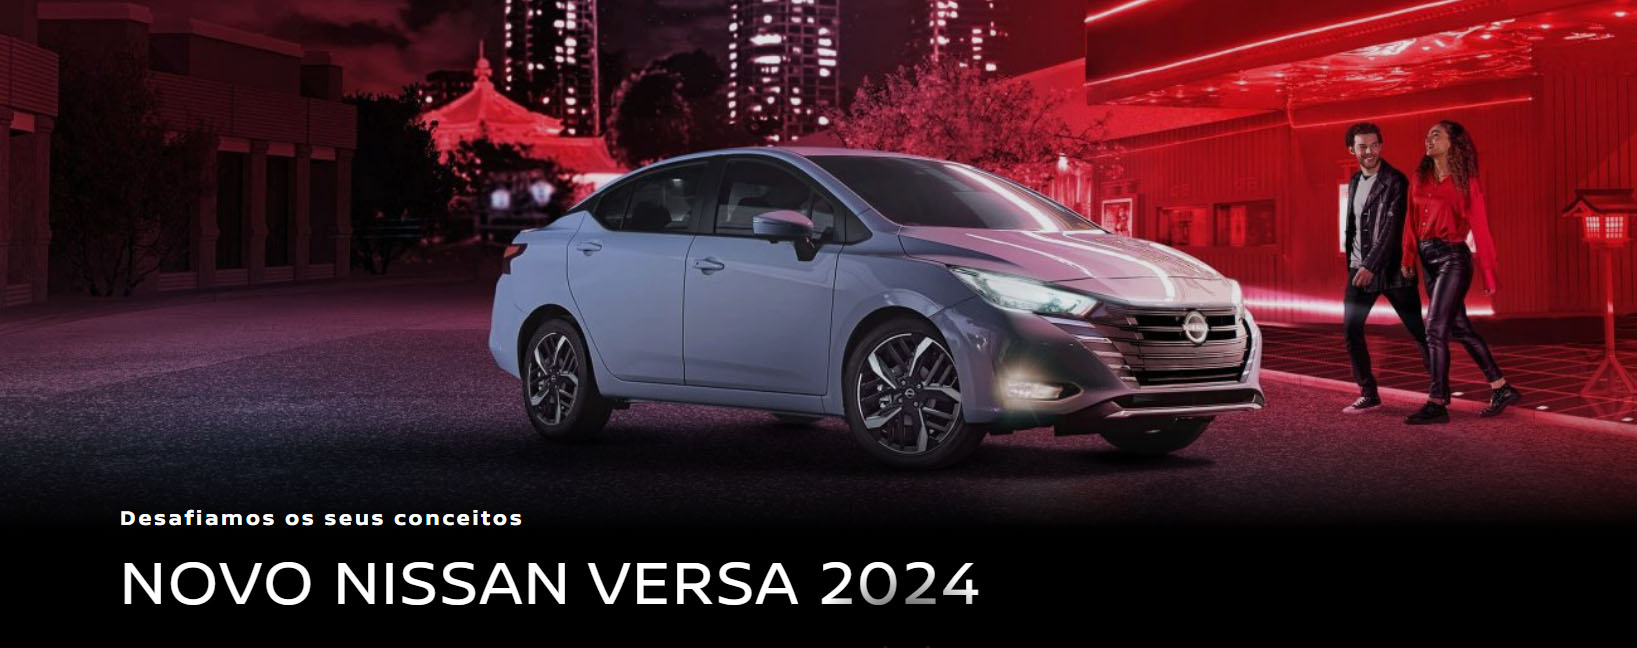 Novo Nissan Versa - Granjapan Nissan